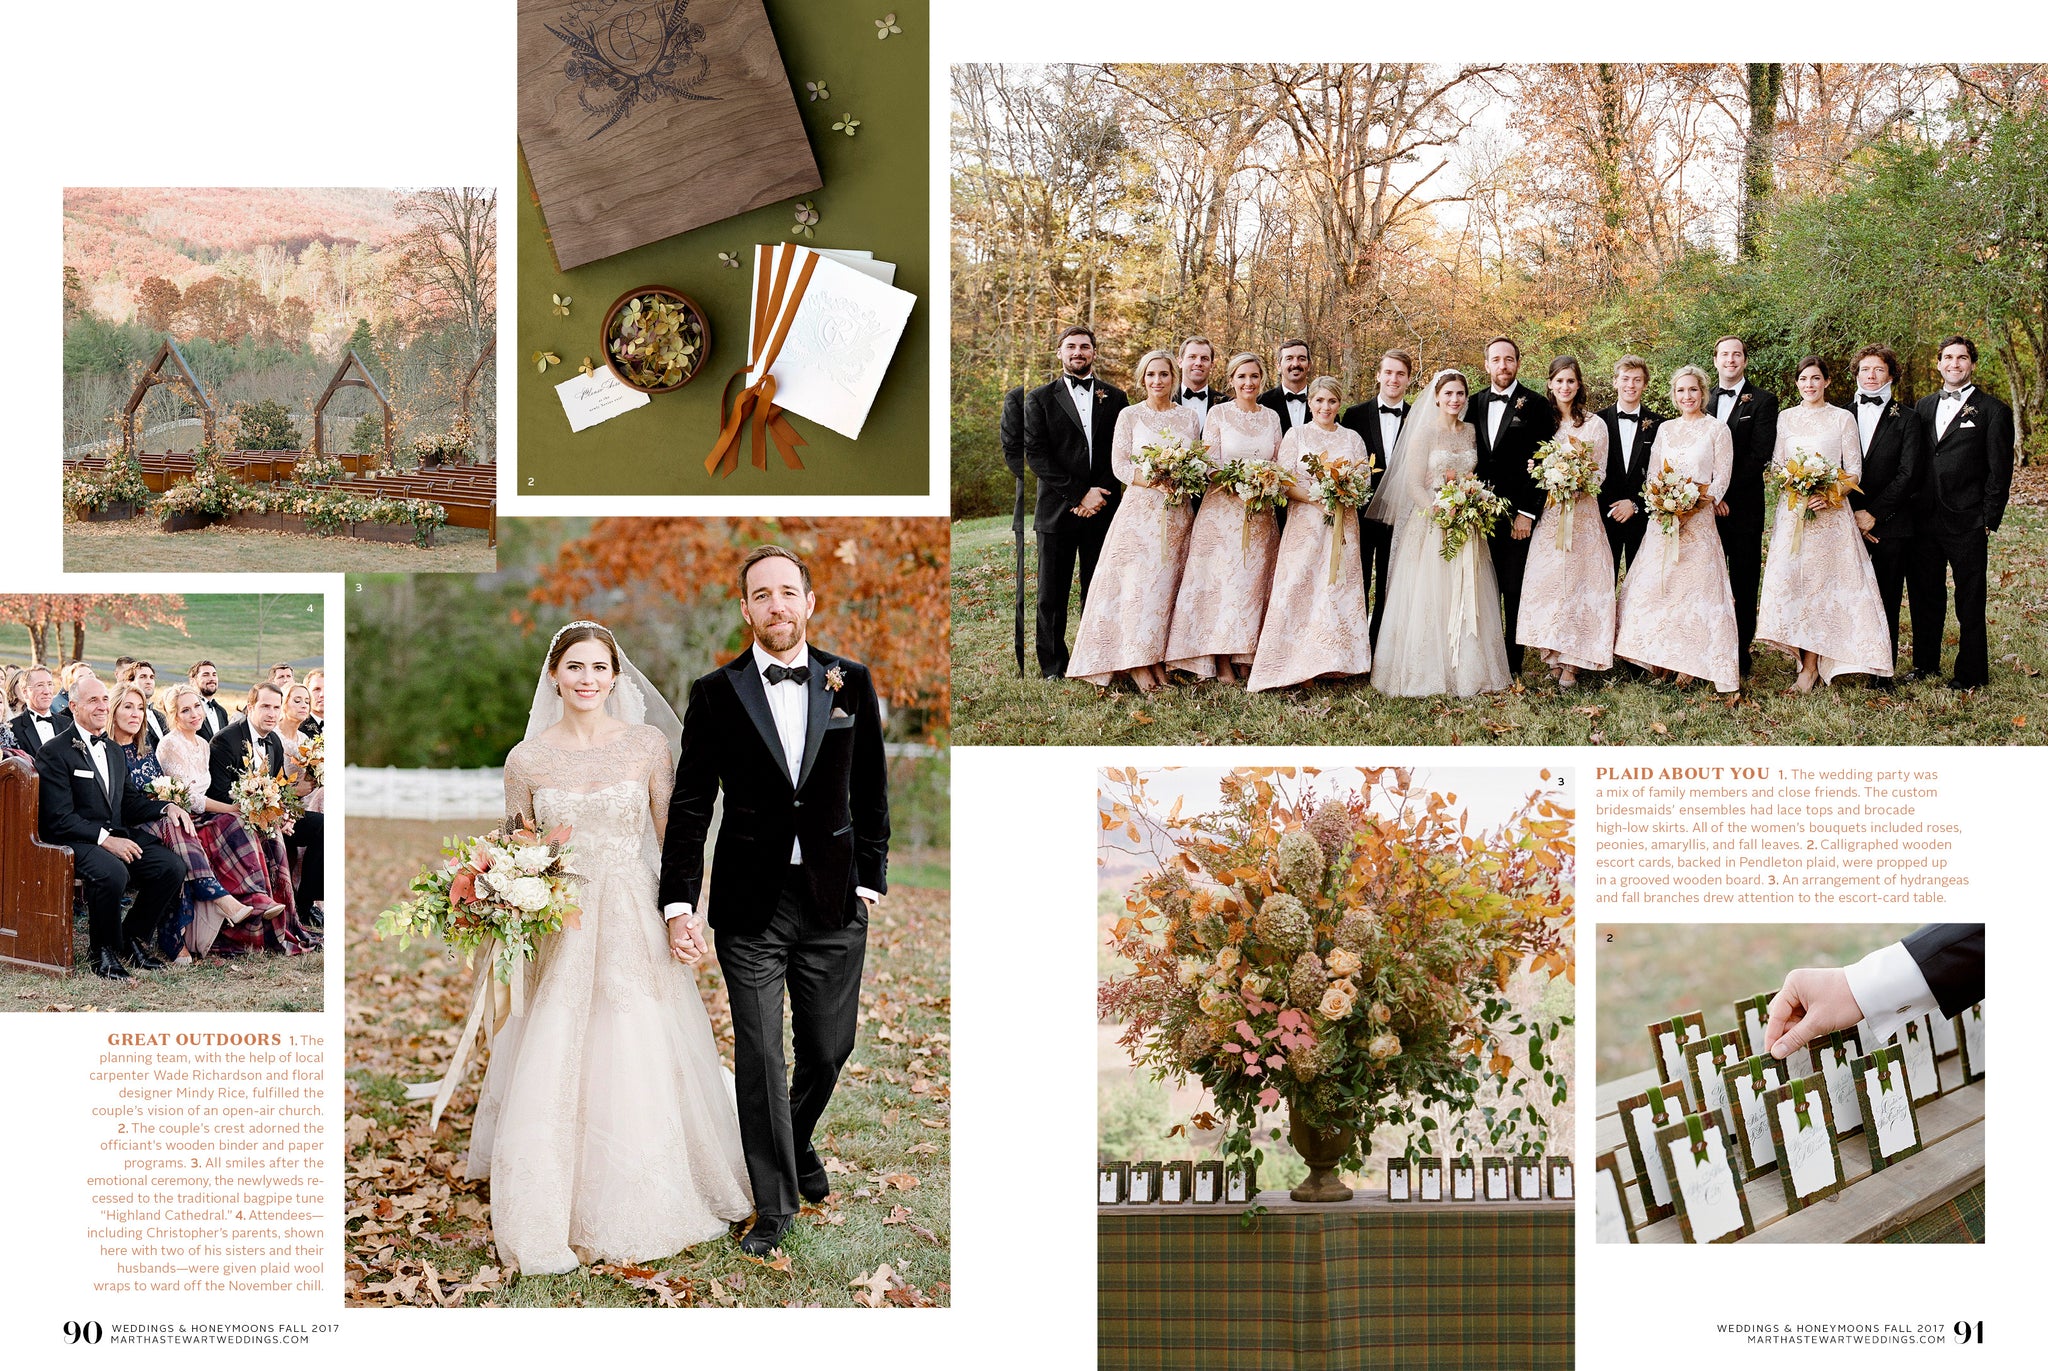 a-signature-welcome-charleston-sc-martha-stewart-real-weddings-and-honeymoons-fall-page-4.jpg